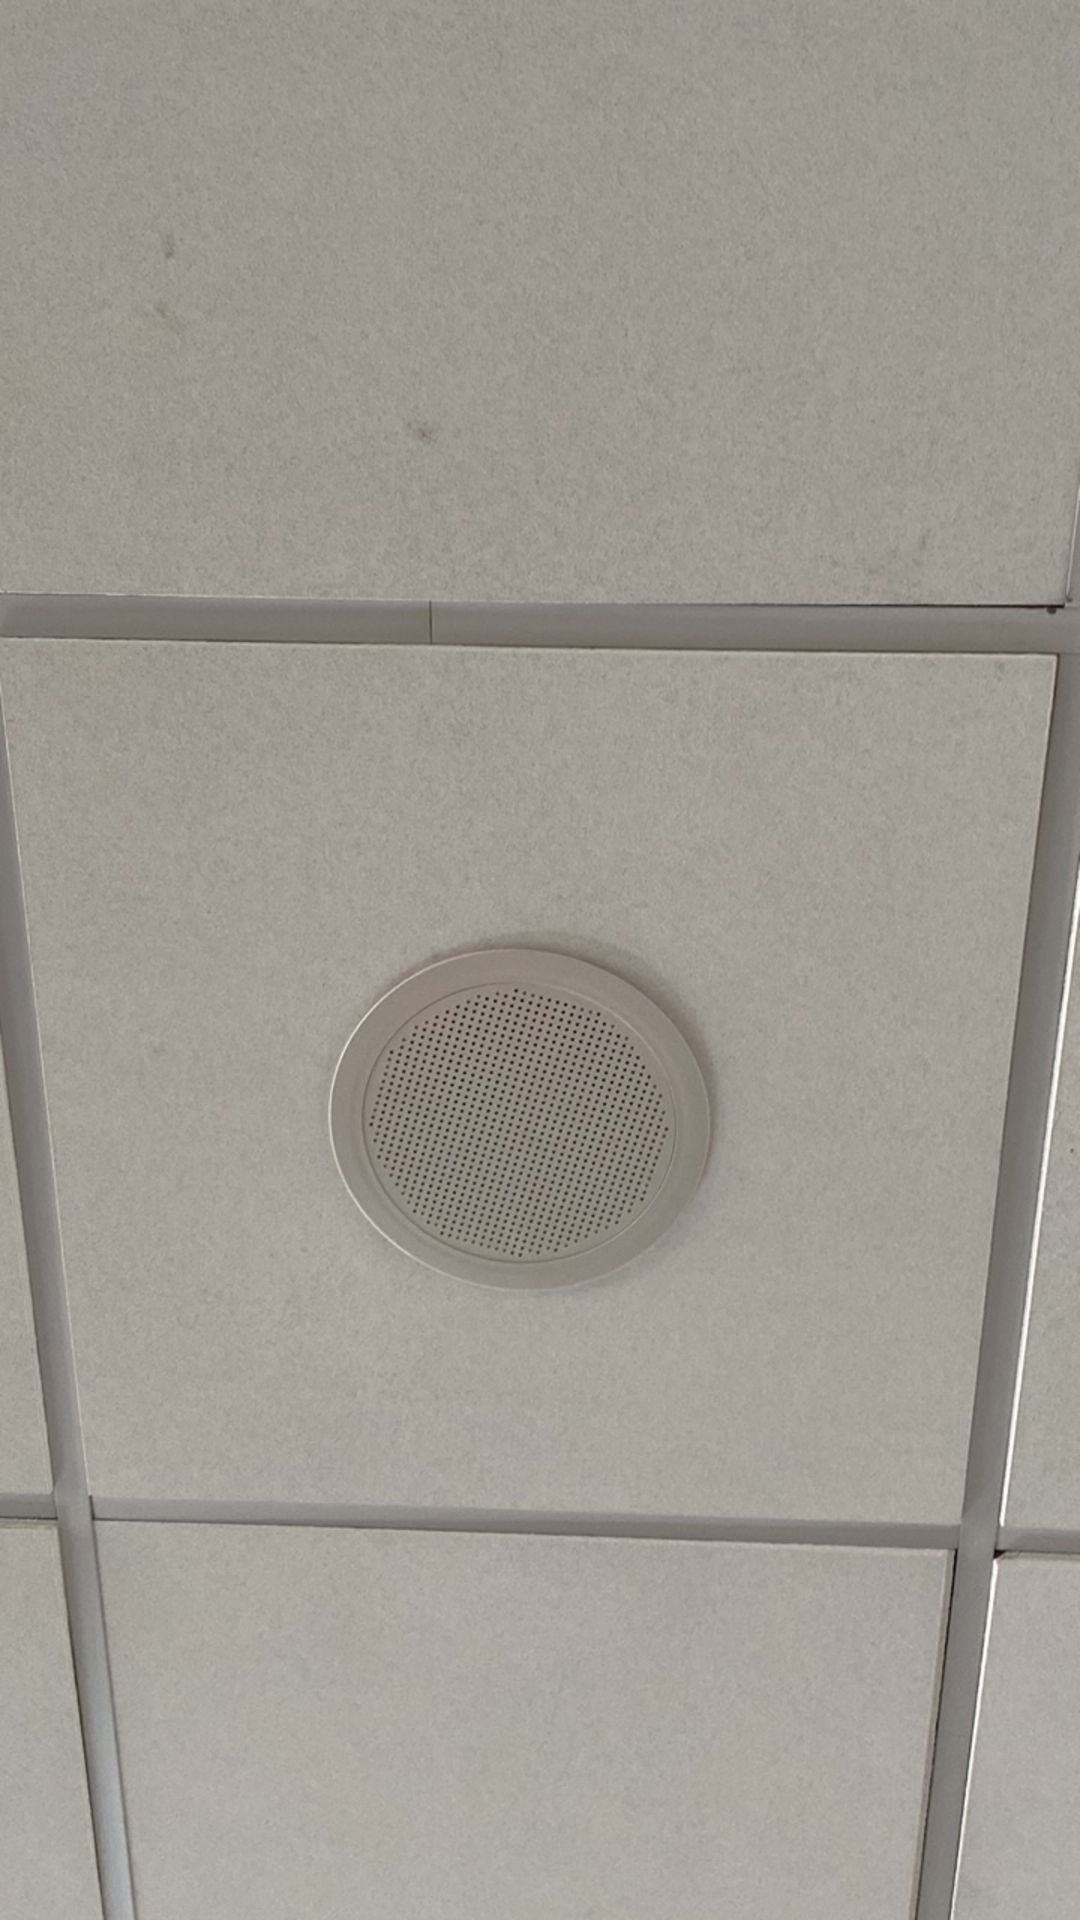 Ceiling Speaker X10 - Image 2 of 3